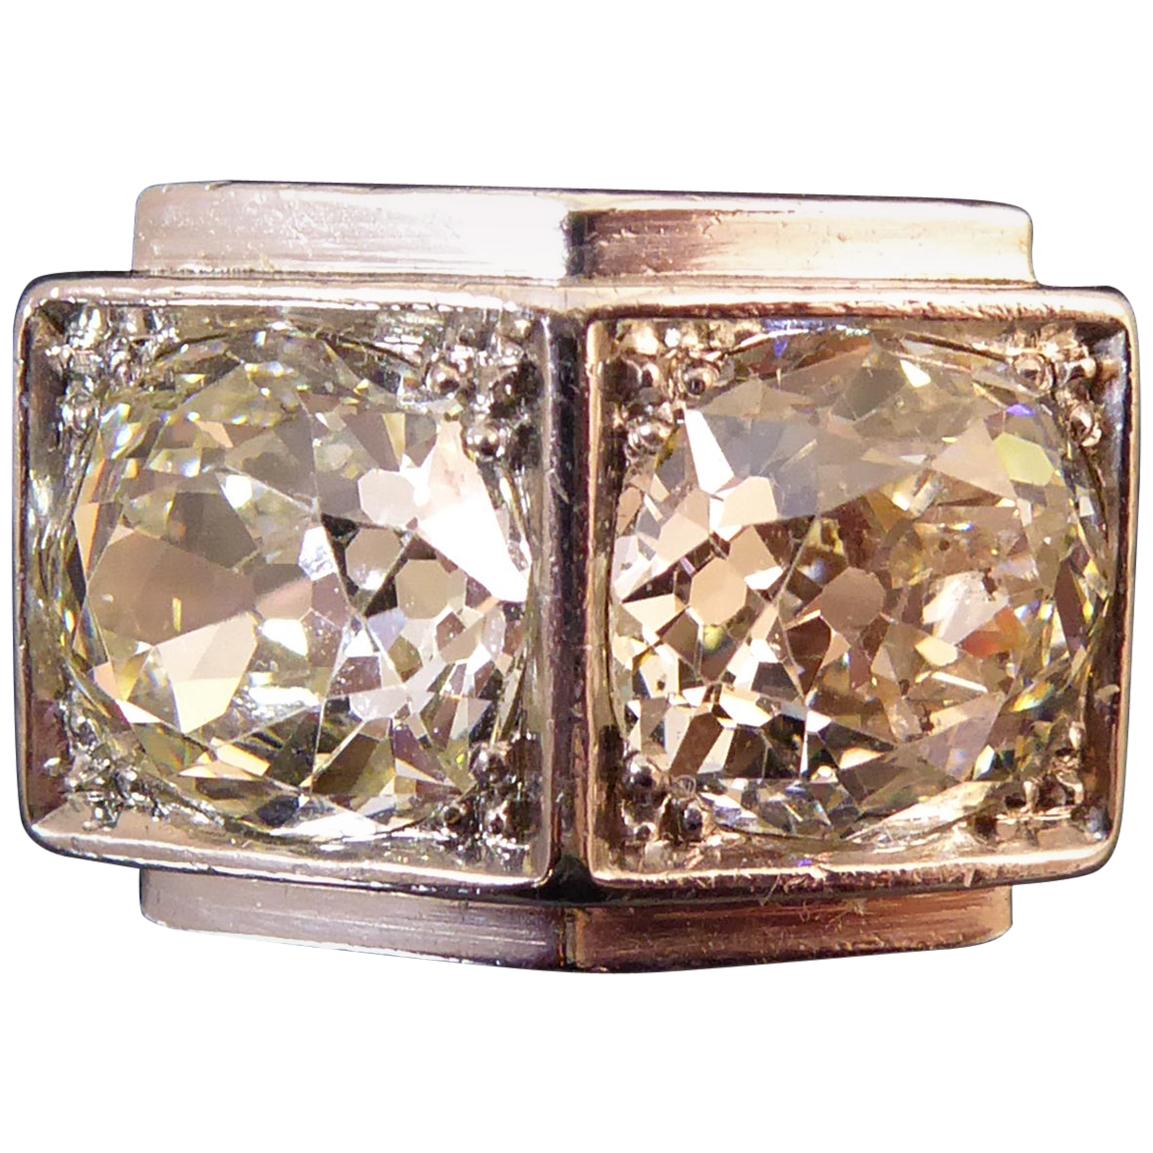 5.05 Carat Diamond Ring, Old European Cut Diamonds, French Design, Platinum